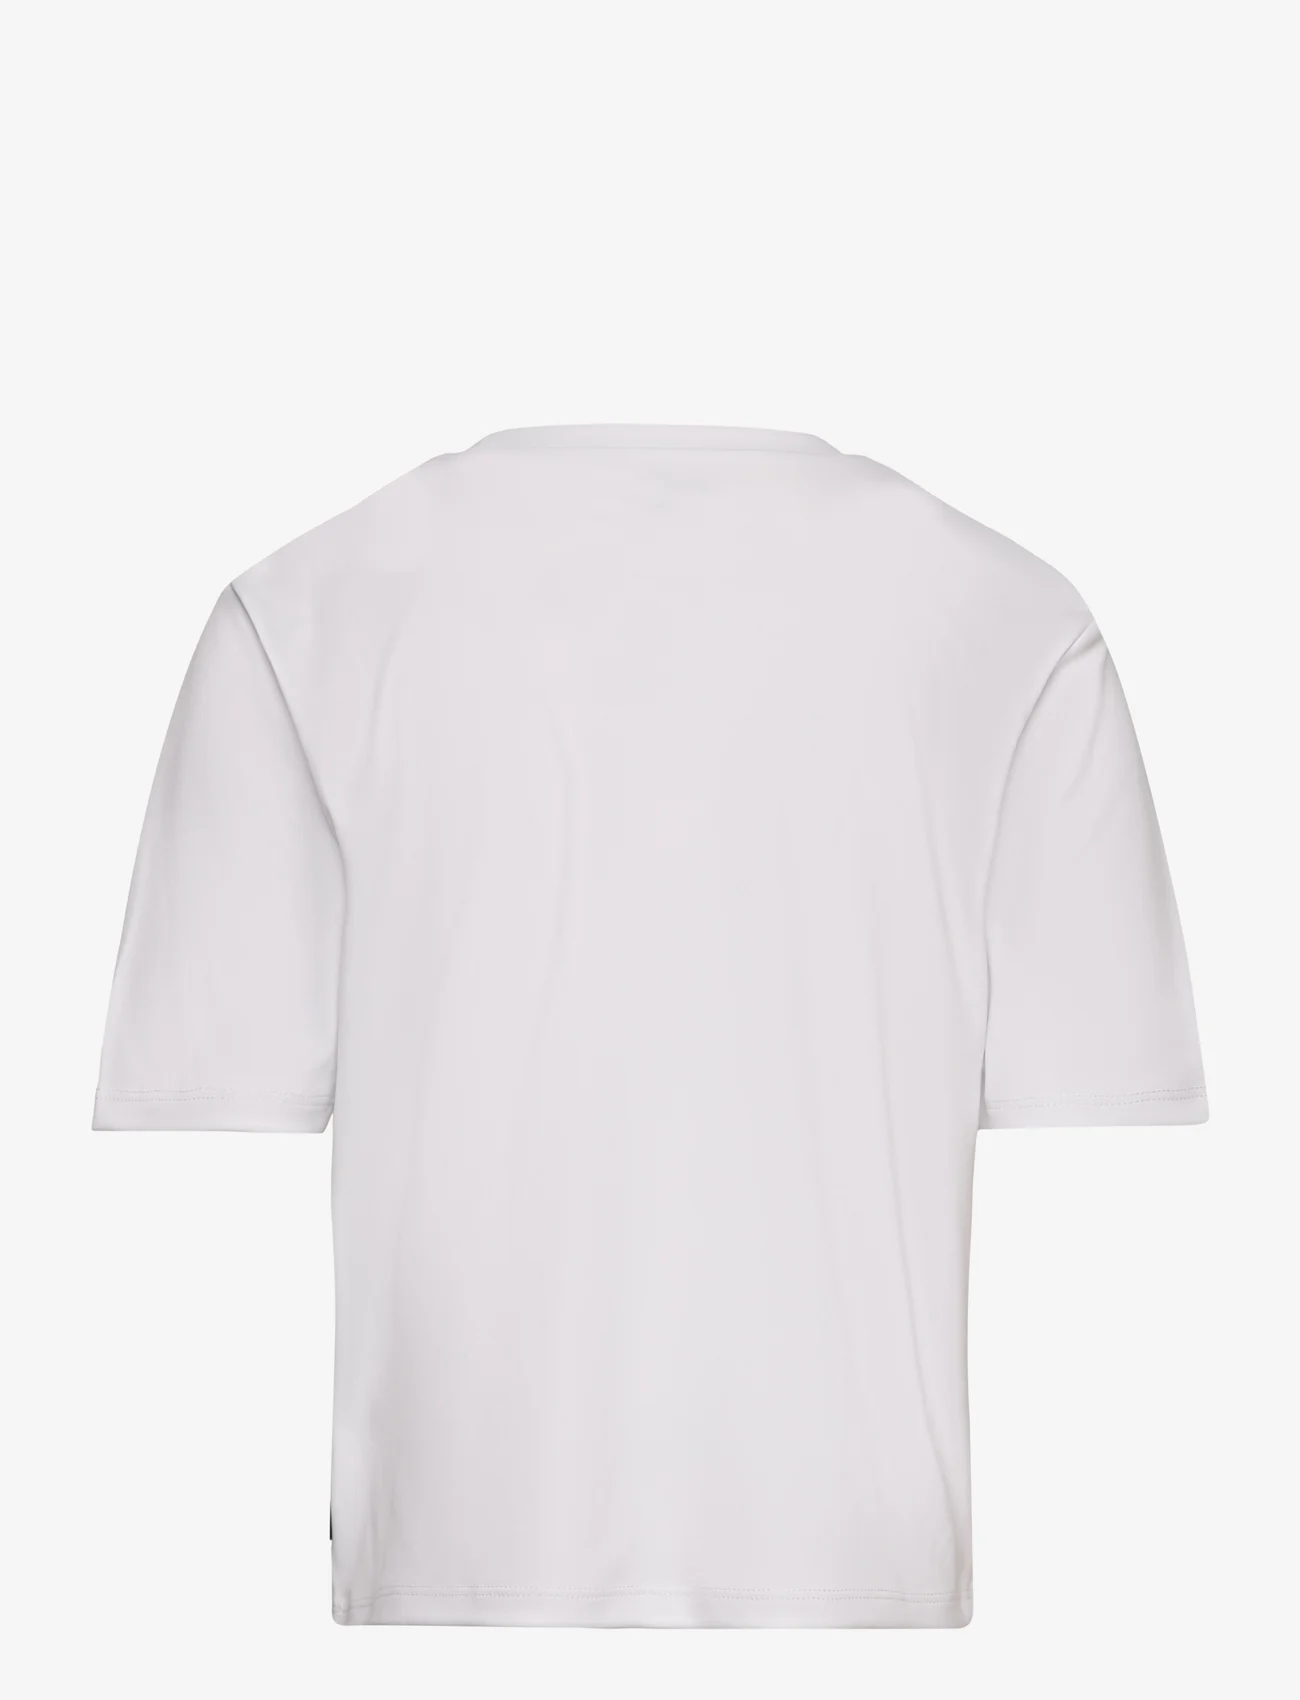 VANS - BUTTERFLY FLOAT SS SUNSHIRT - marškinėliai trumpomis rankovėmis - white - 1